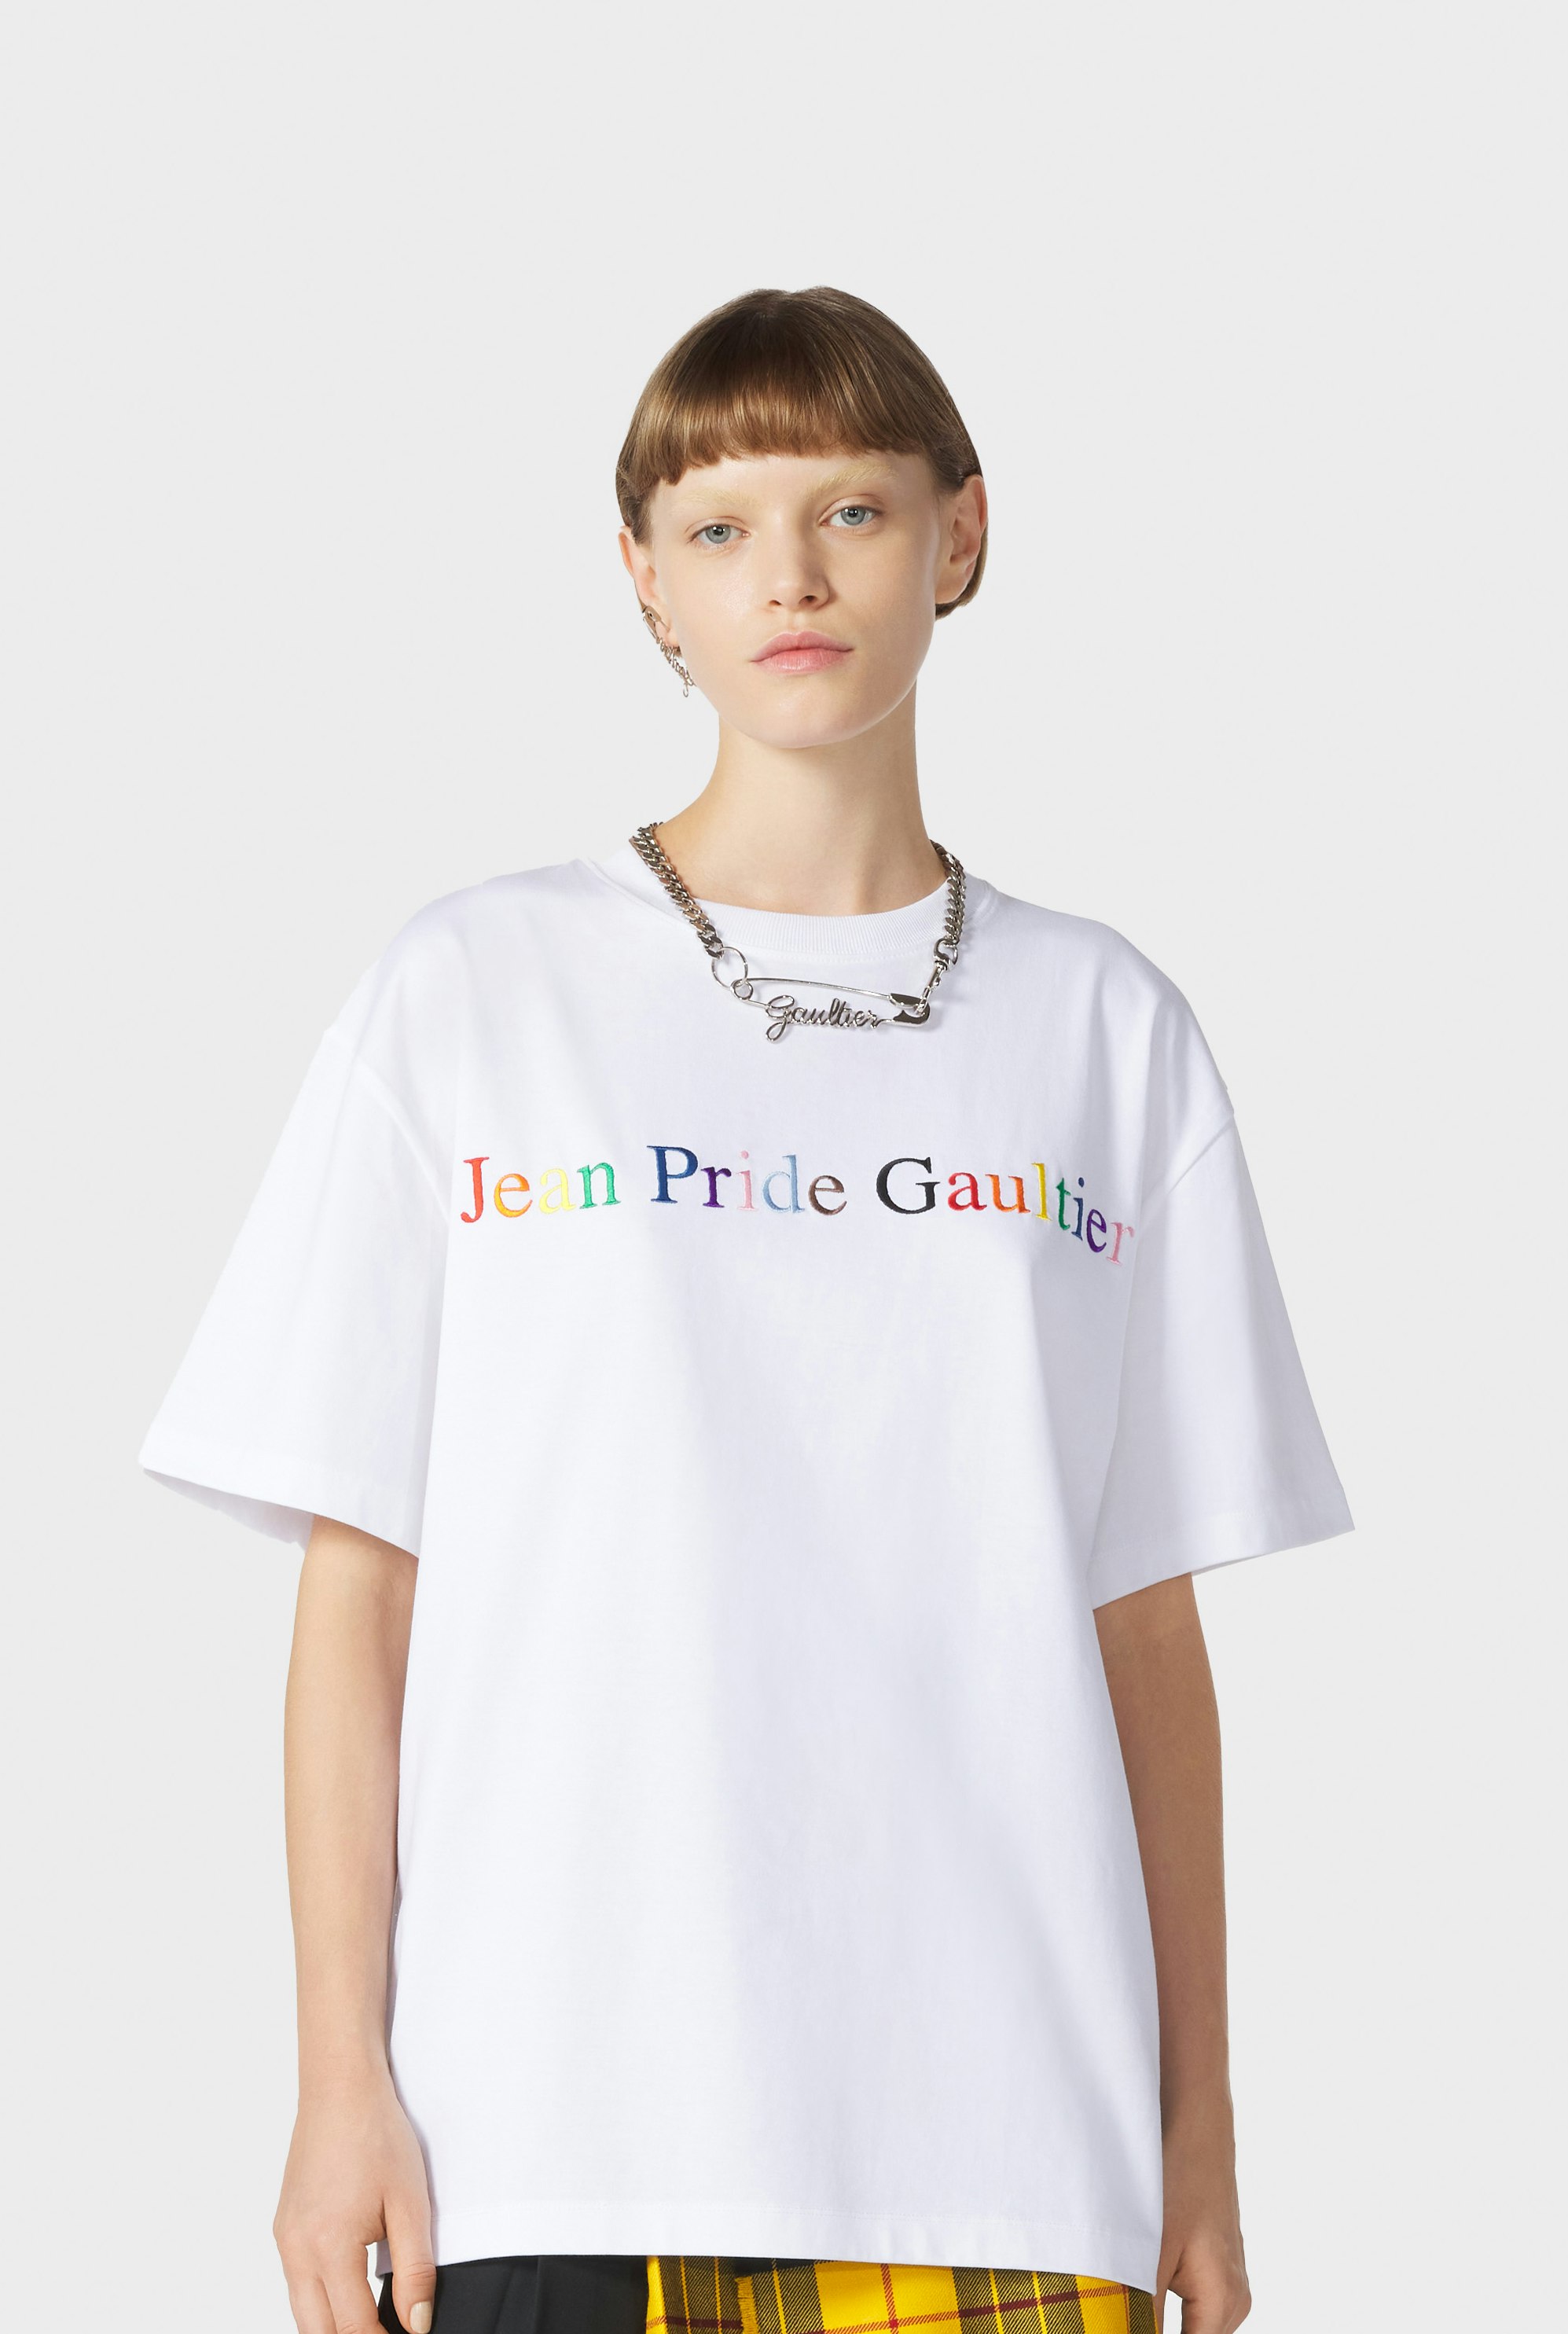 Pride - The Jean Pride Gaultier T-Shirt